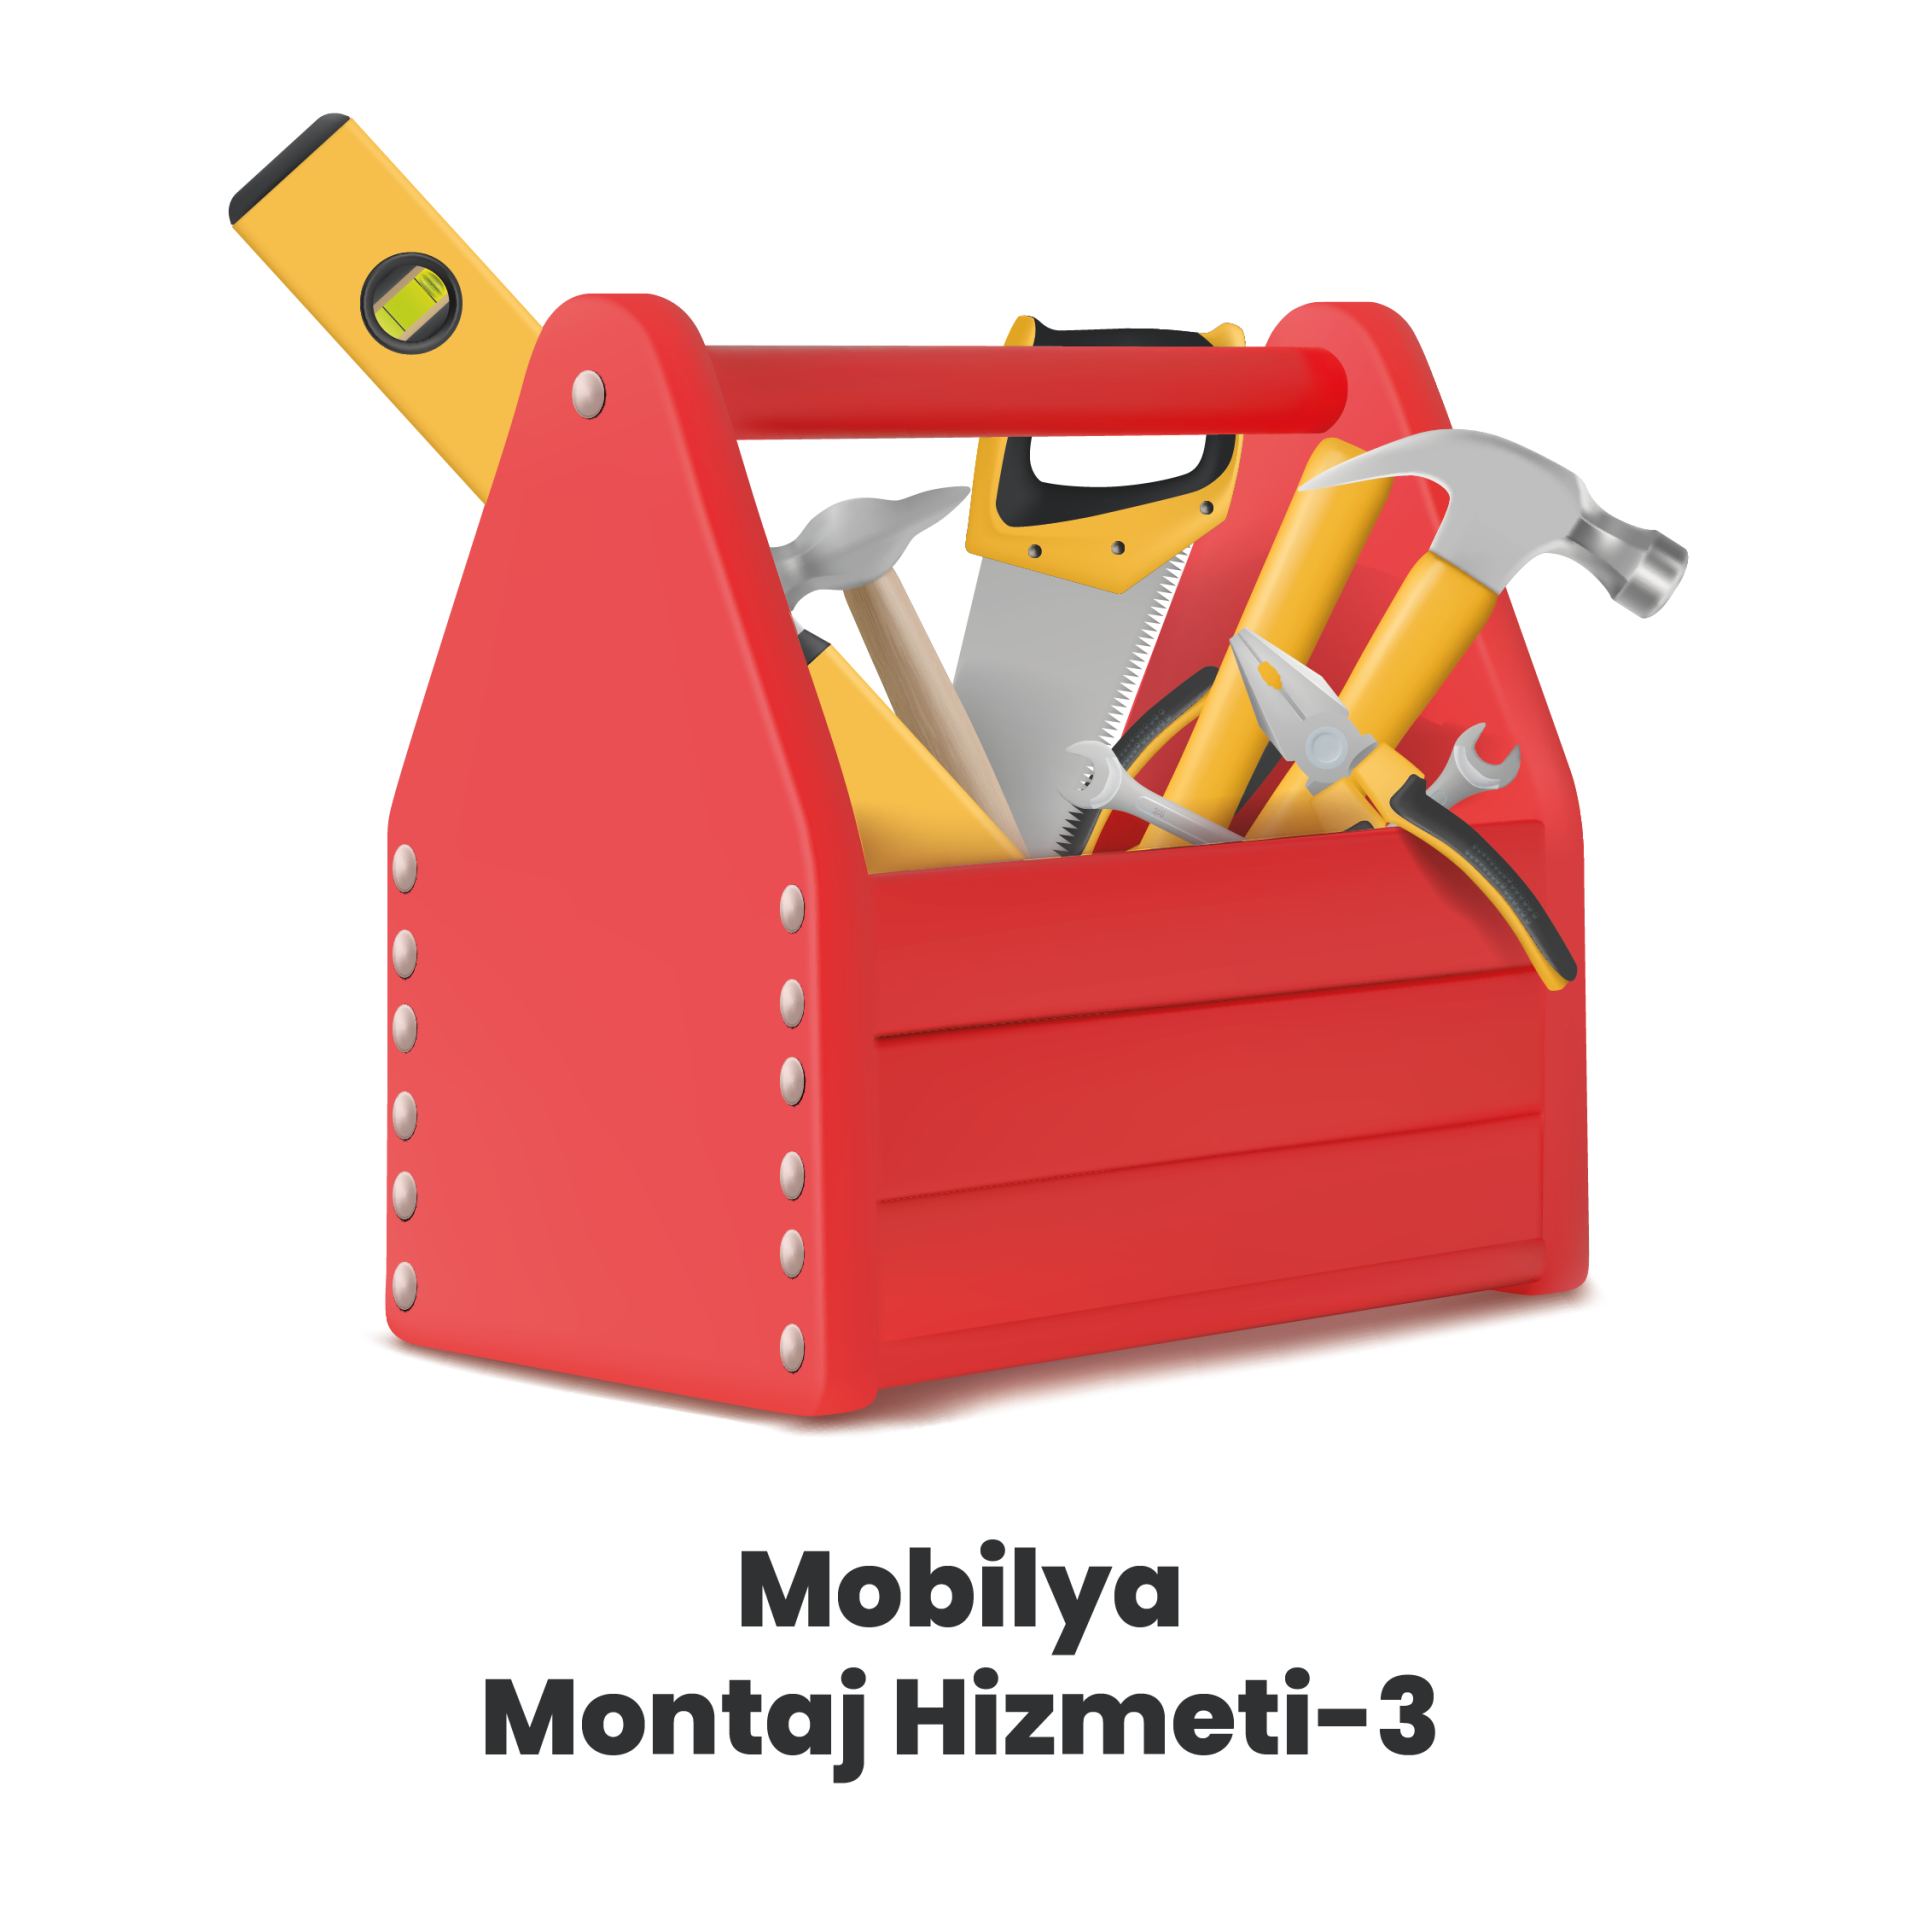 Mobilya Montaj Hizmeti-3 (1000 - 1999 TL ARASI)